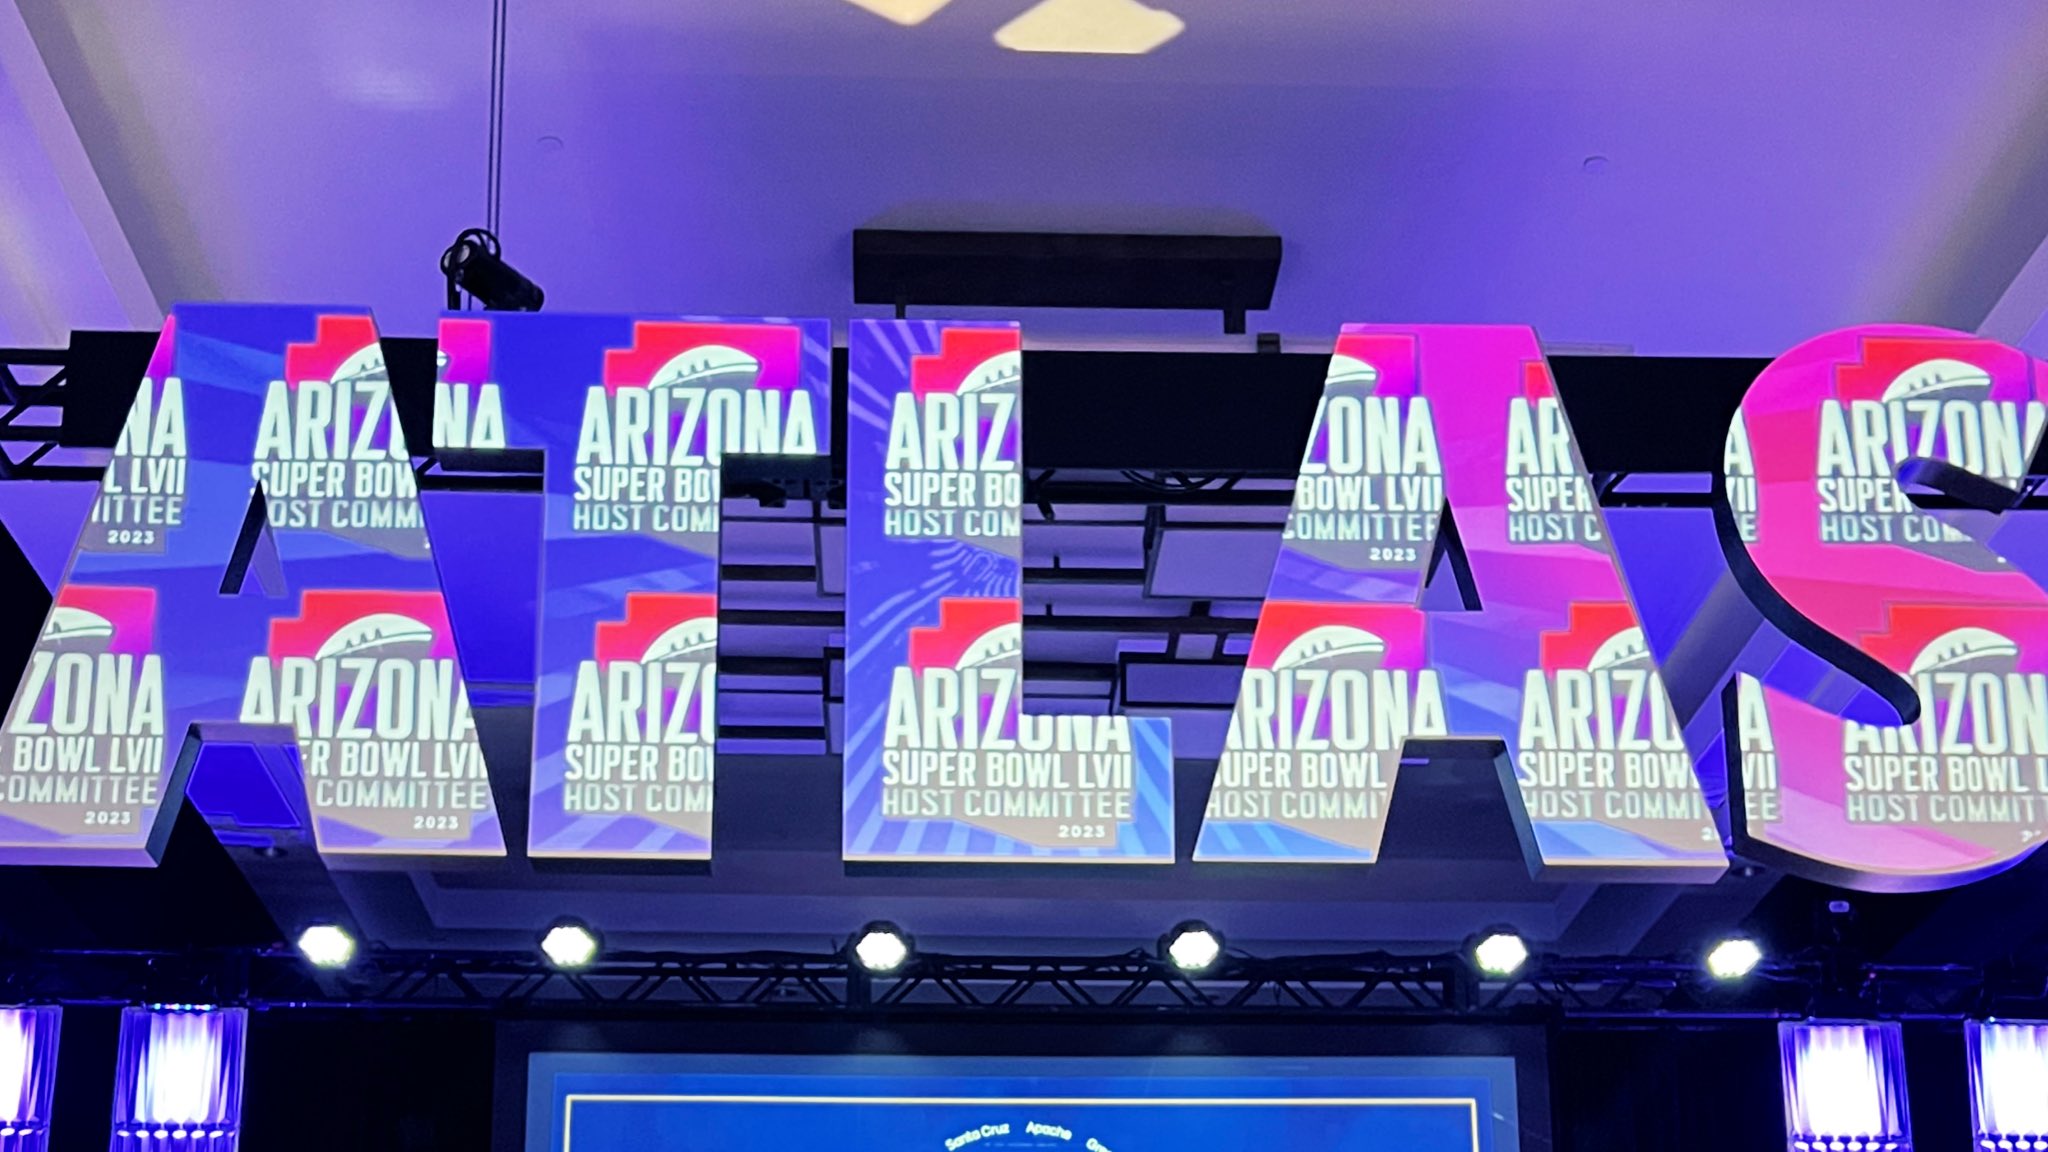 Arizona already getting ready to host the 2023 Super Bowl